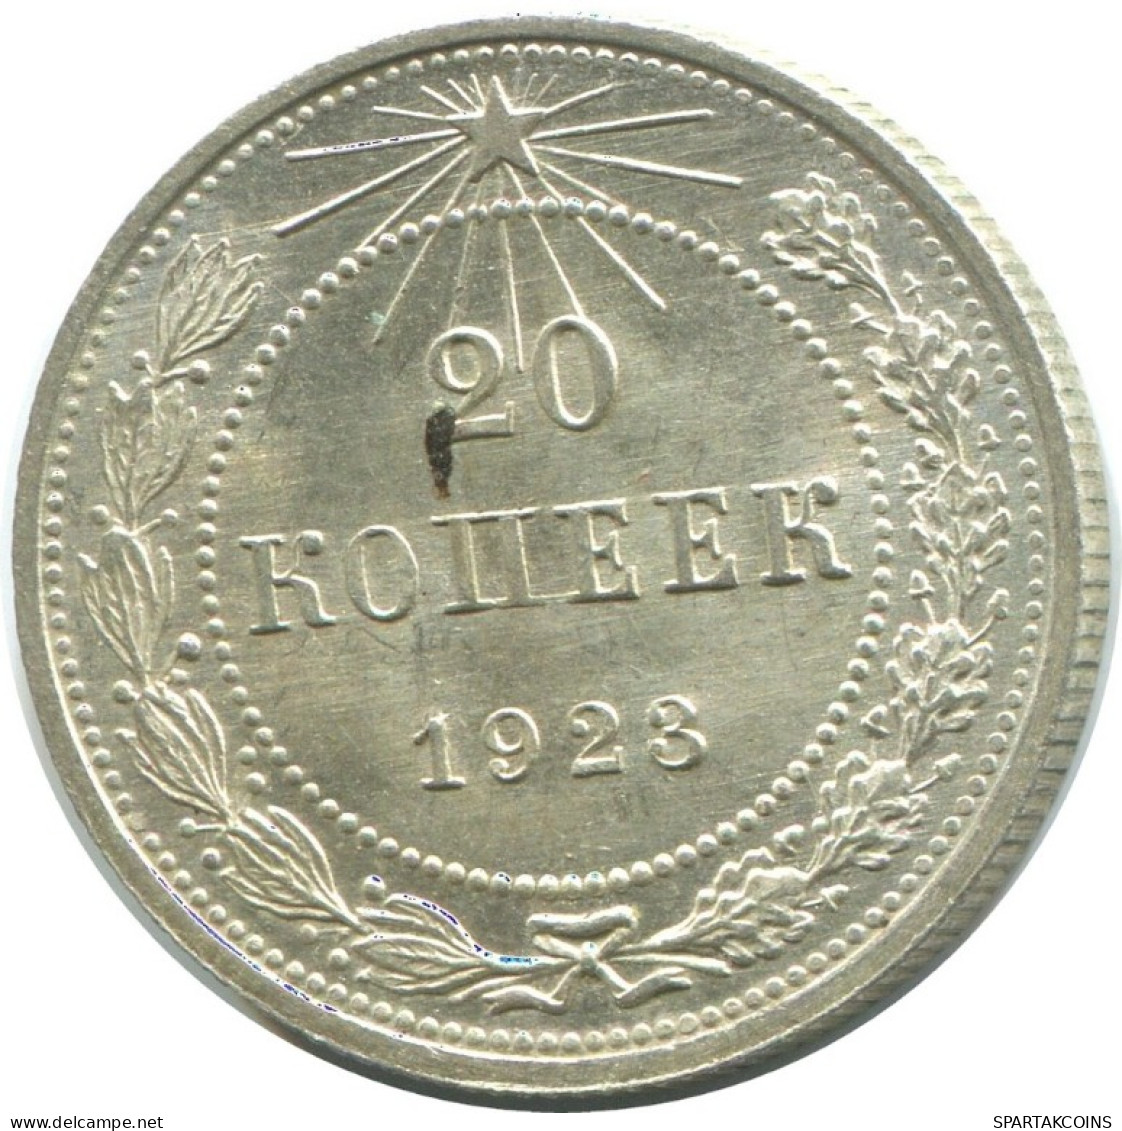 20 KOPEKS 1923 RUSSIA RSFSR SILVER Coin HIGH GRADE #AF595.U.A - Russia